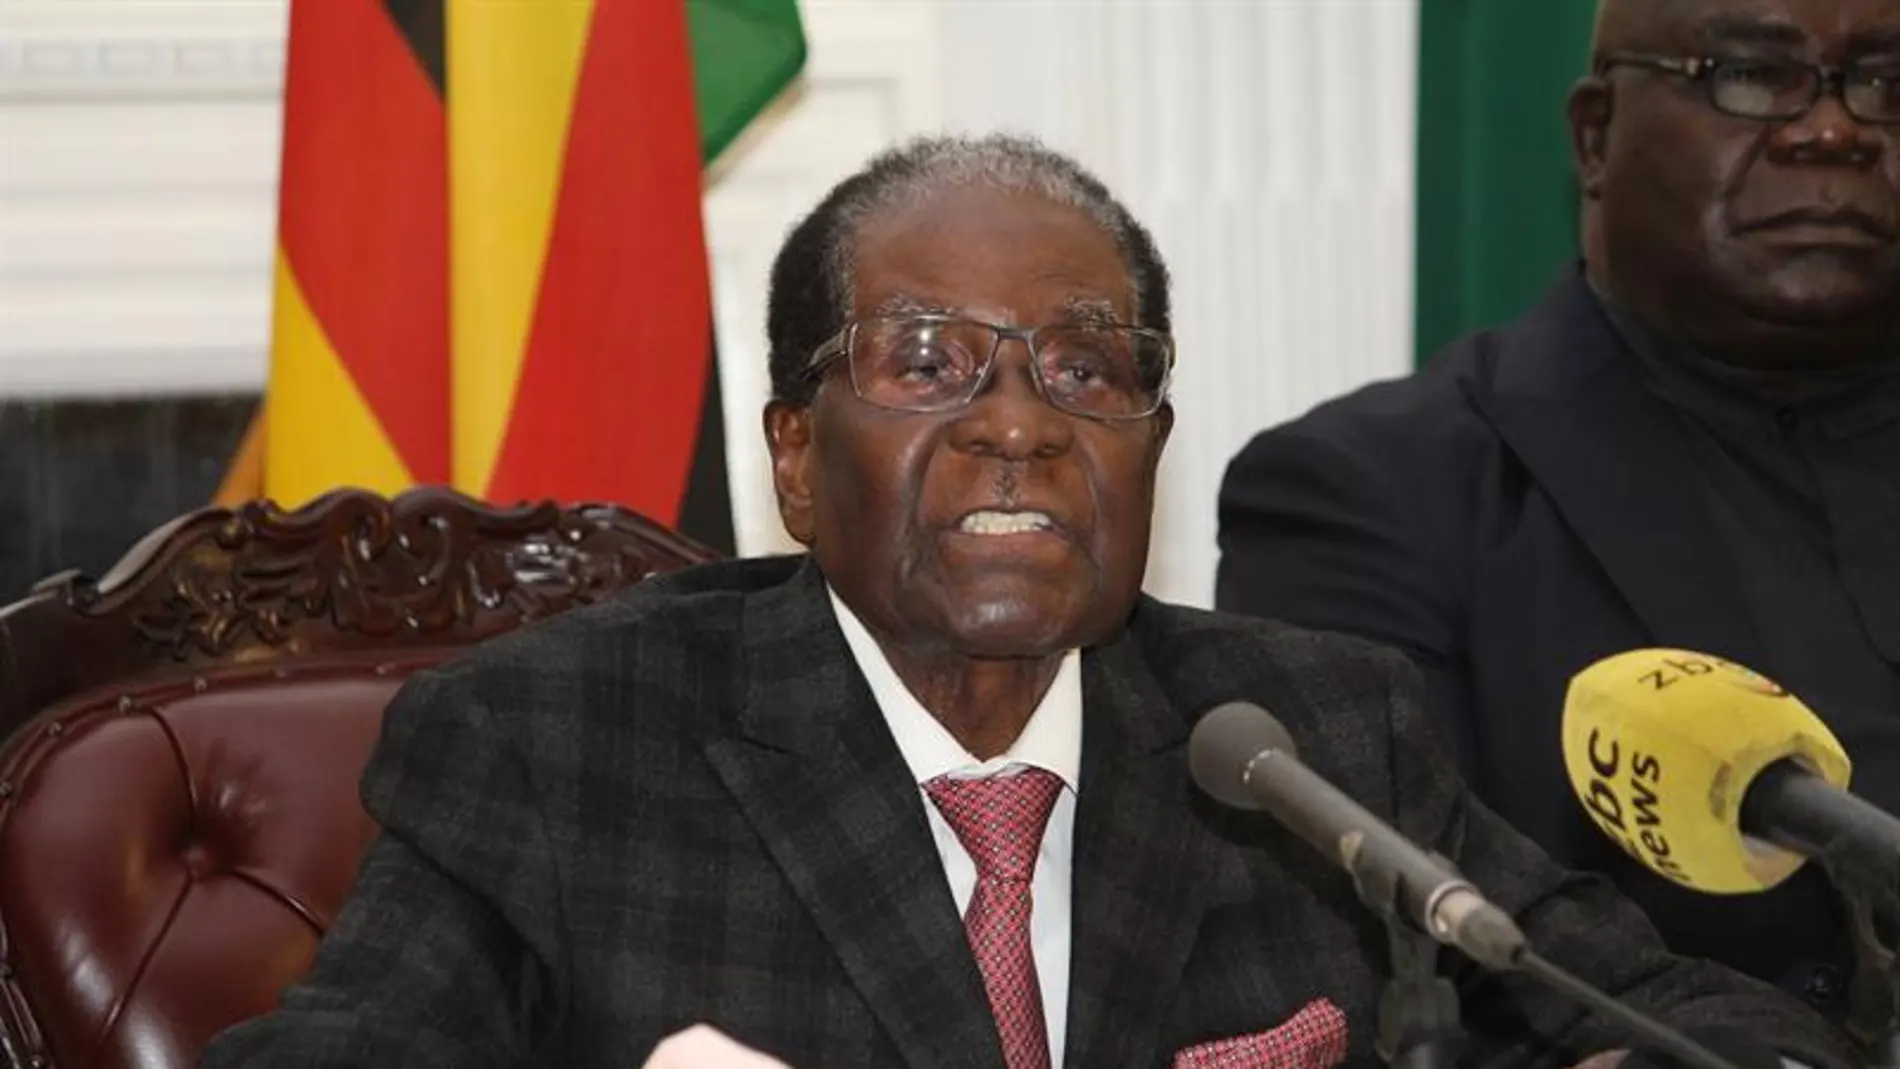 El expresidente de Zimbabue, Robert Mugabe